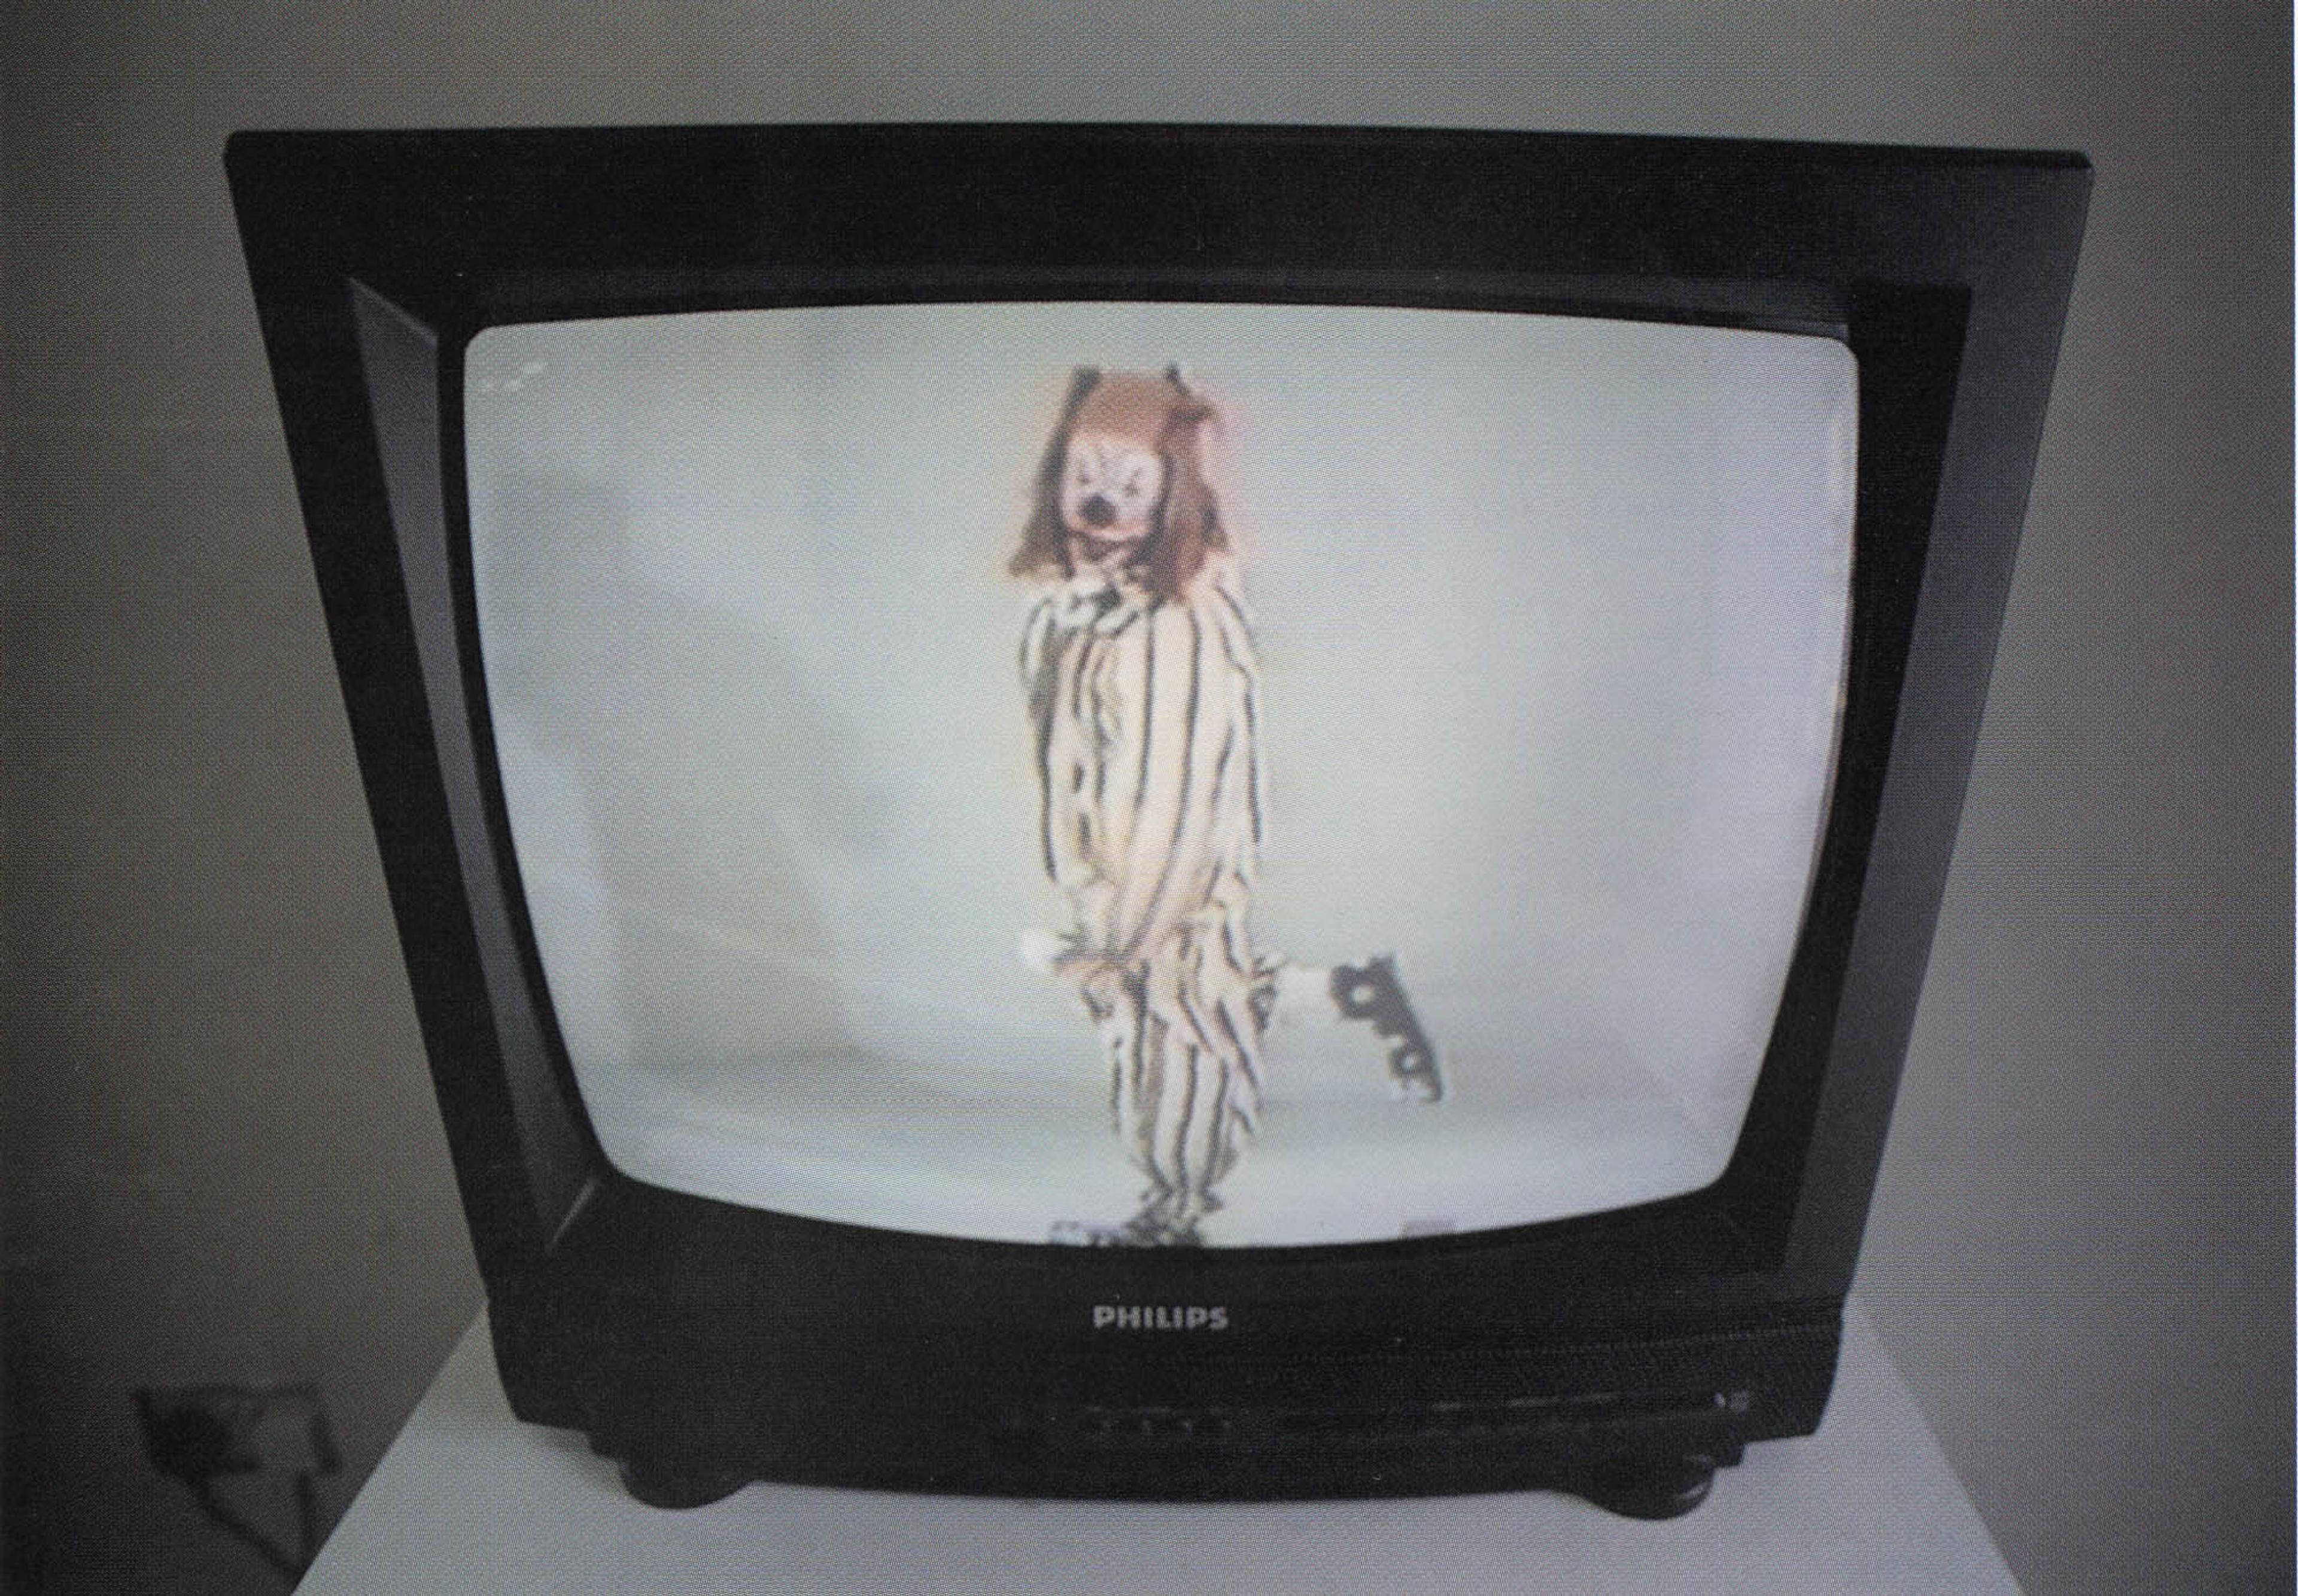 (1994) Bruce Nauman, Clown Torture, 1985, diptych, single-channel video.